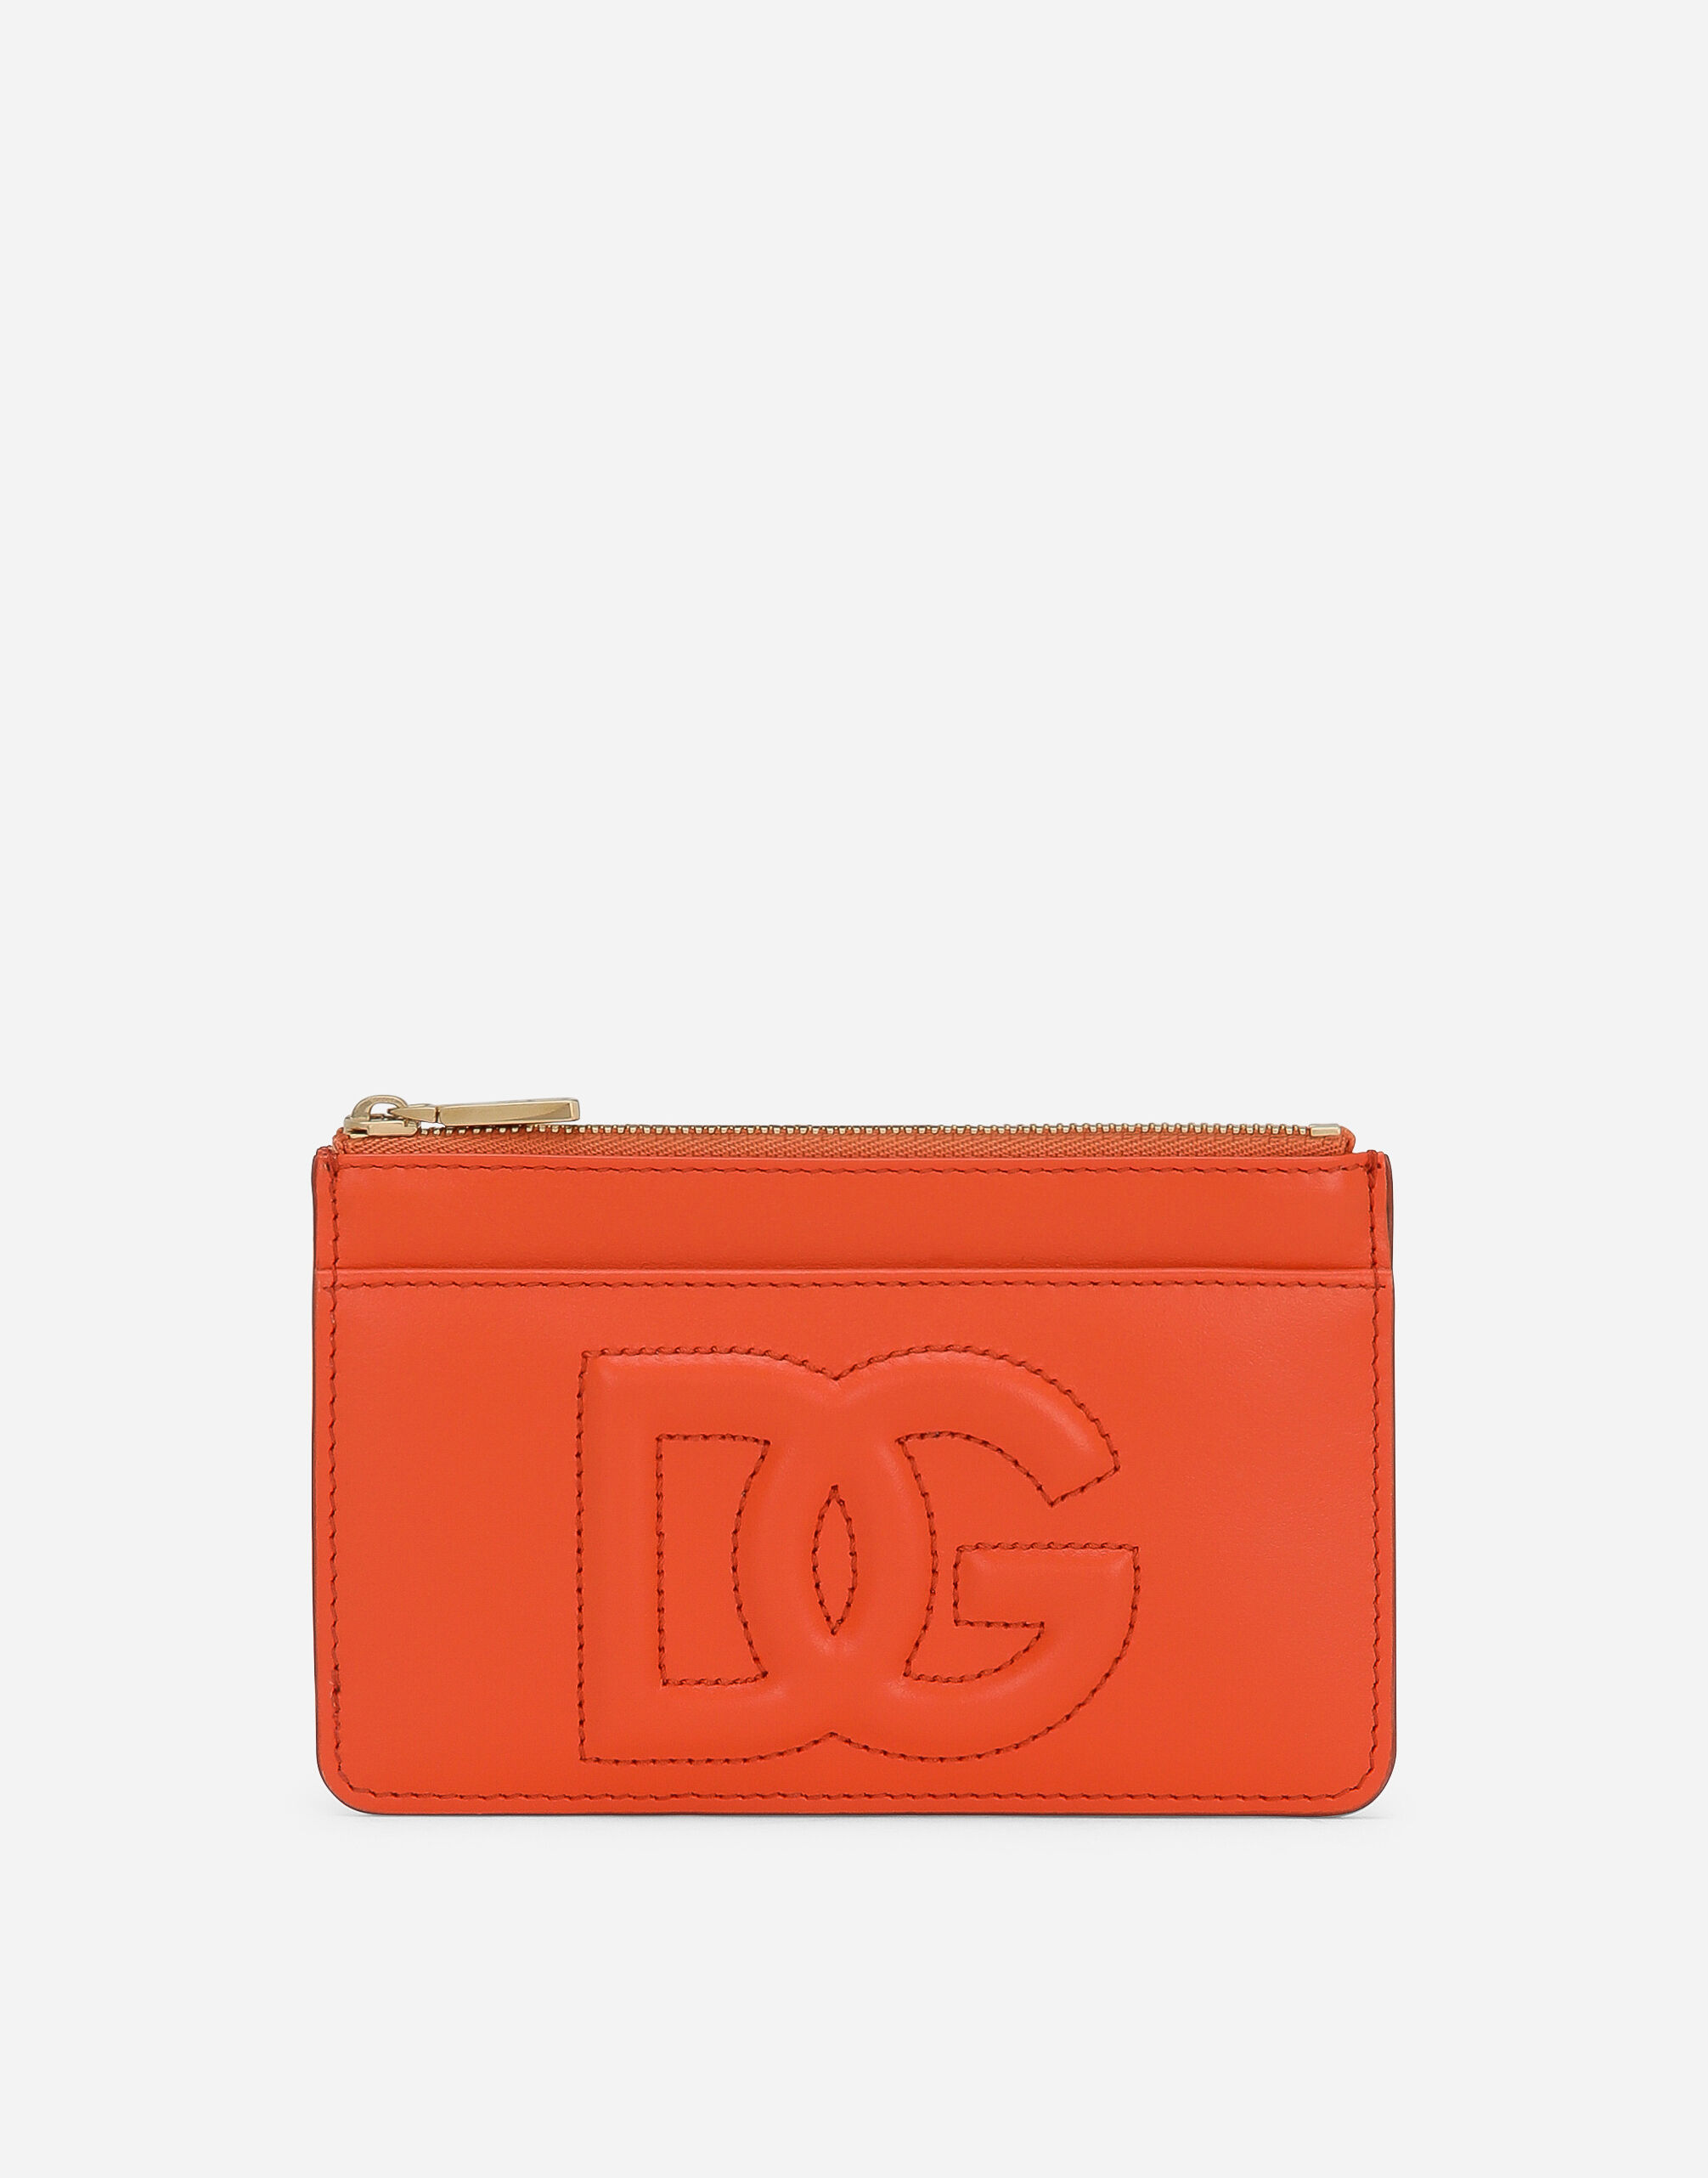 Dolce & Gabbana حافظة بطاقات DG Logo متوسطة مطبعة FN092RGDAOY